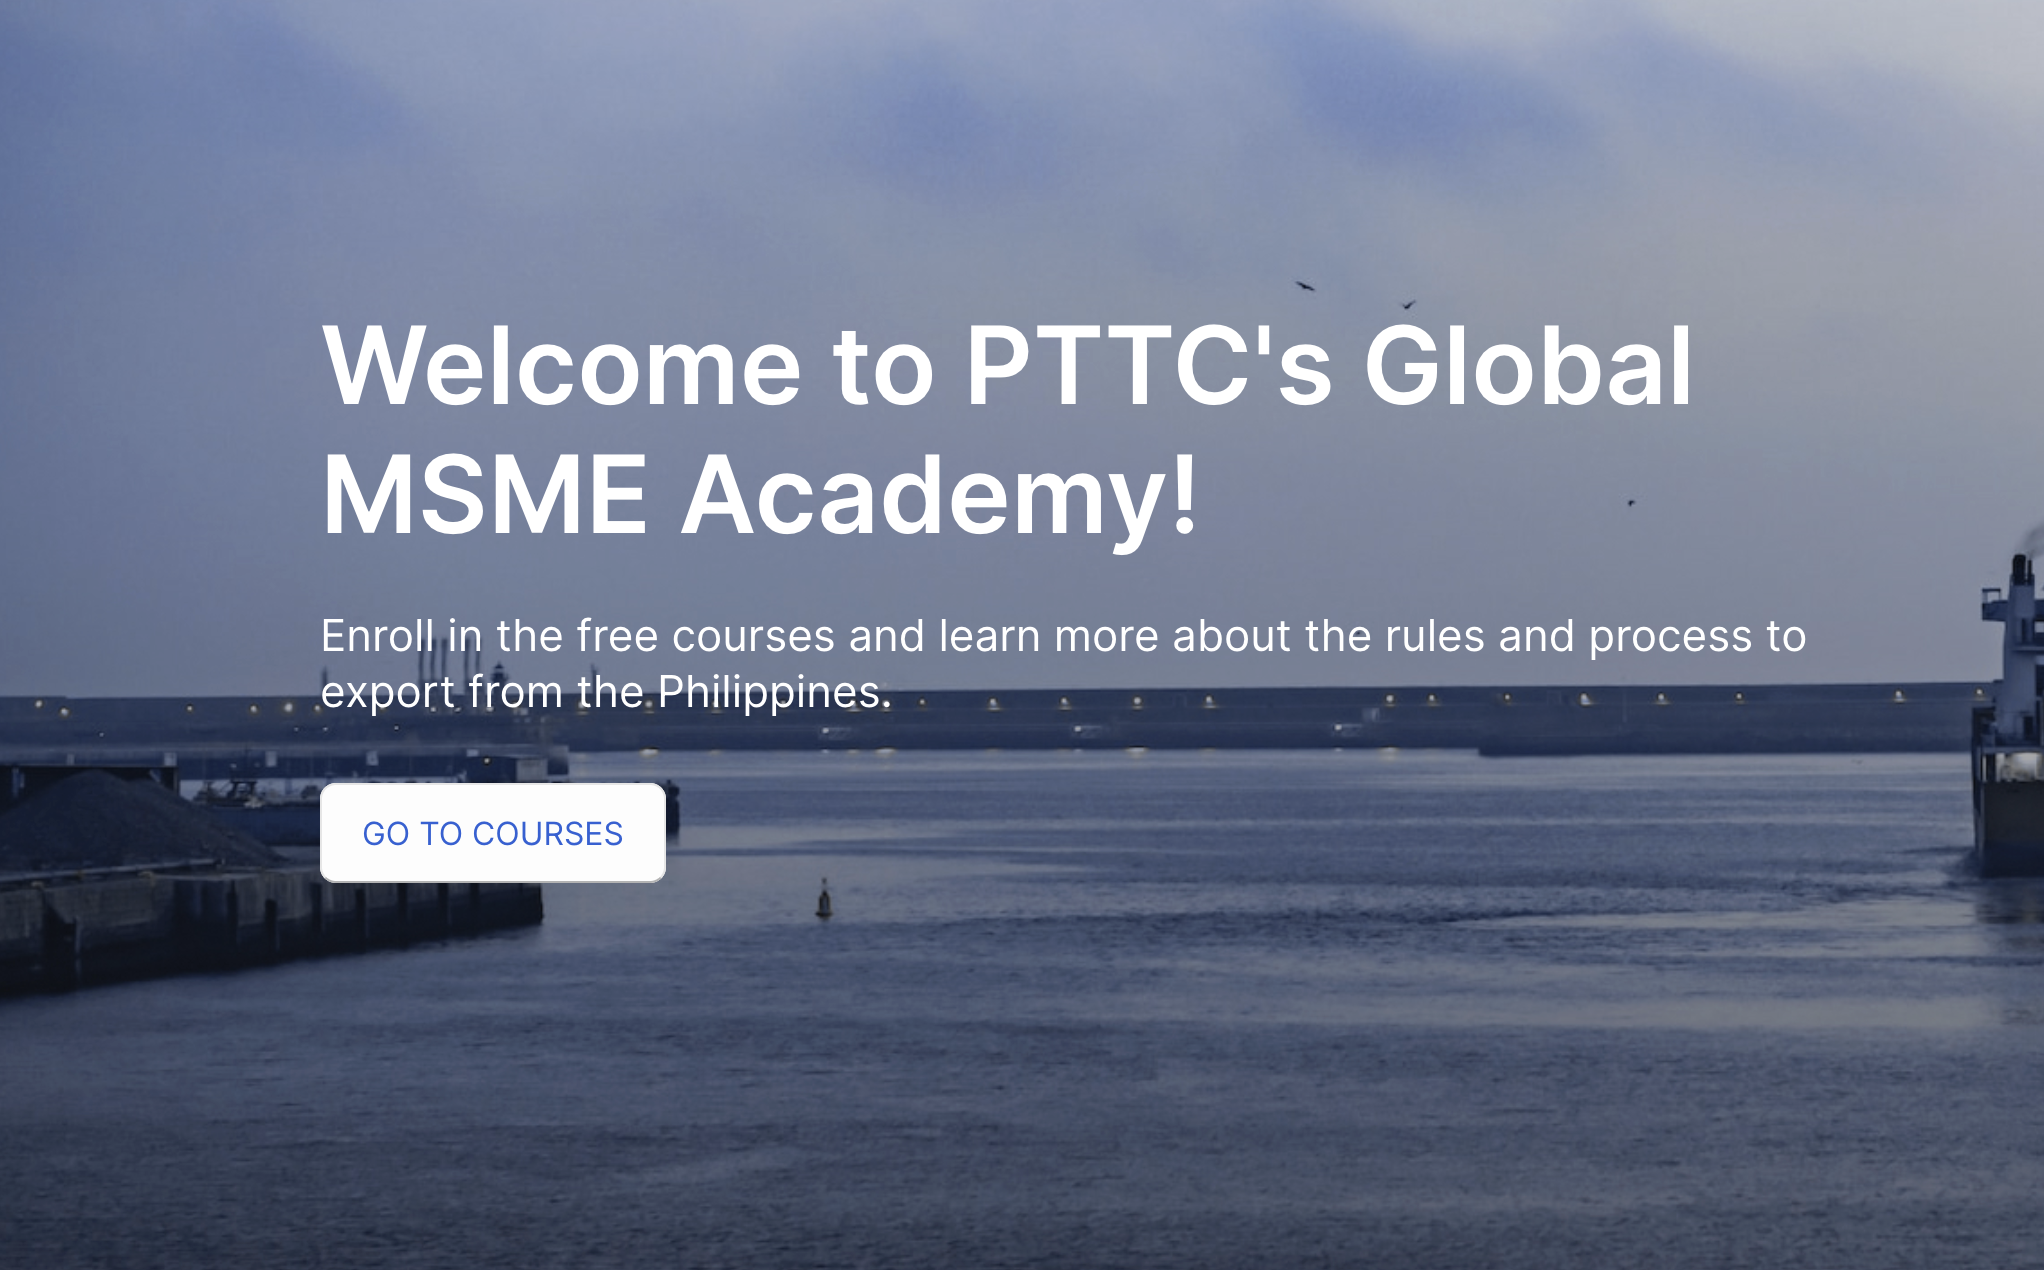 PTTC's Global MSME Academy